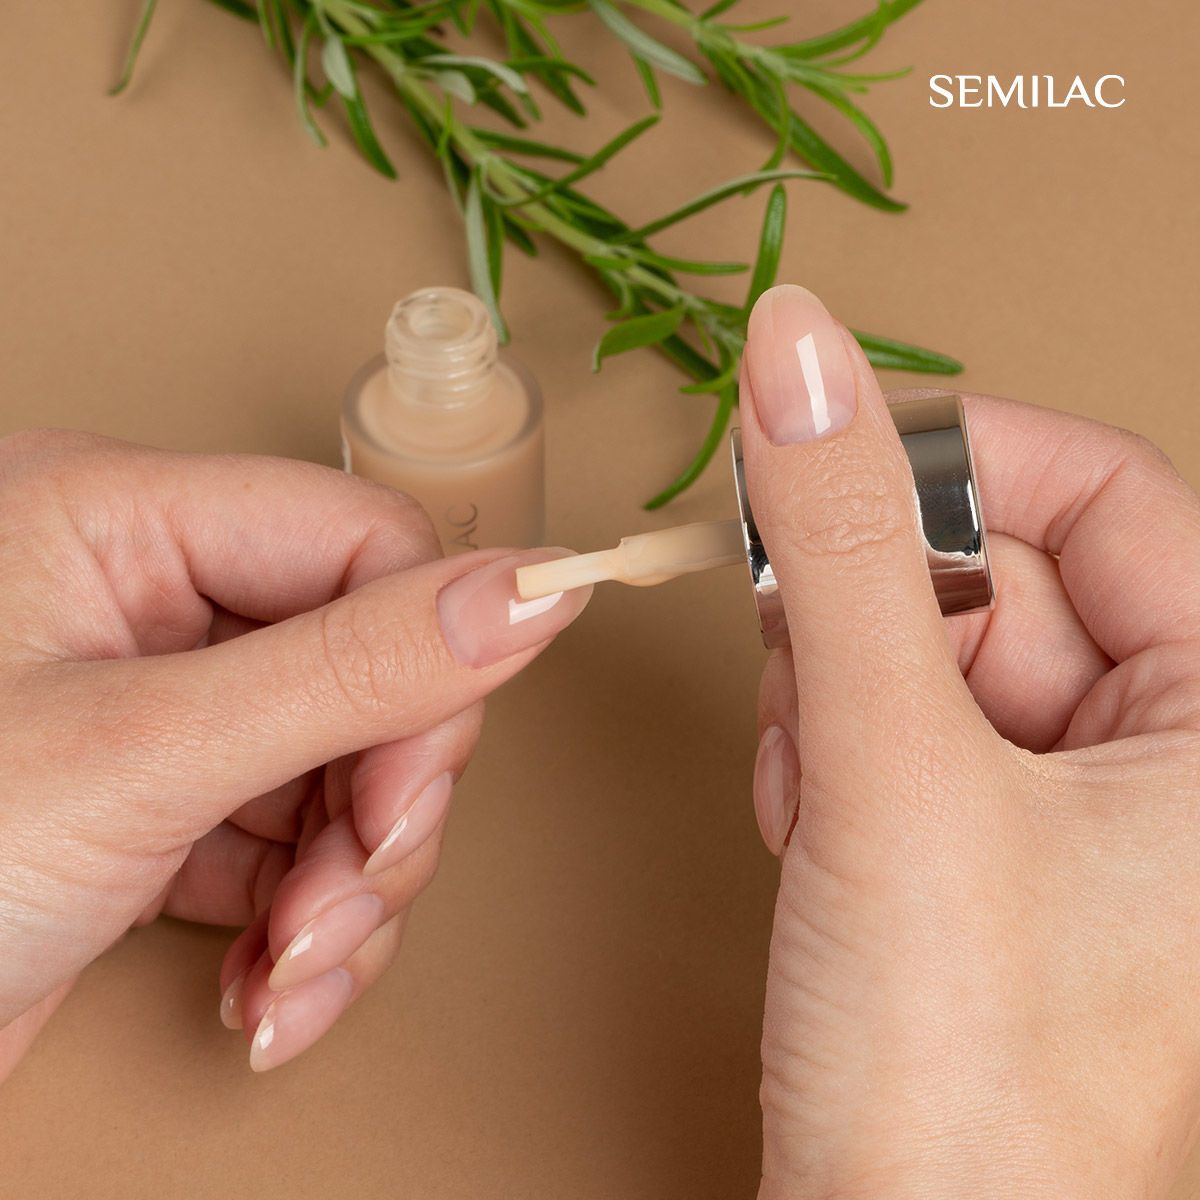 Semilac Protect & Care Nail Conditioner 7ml - Semilac Shop